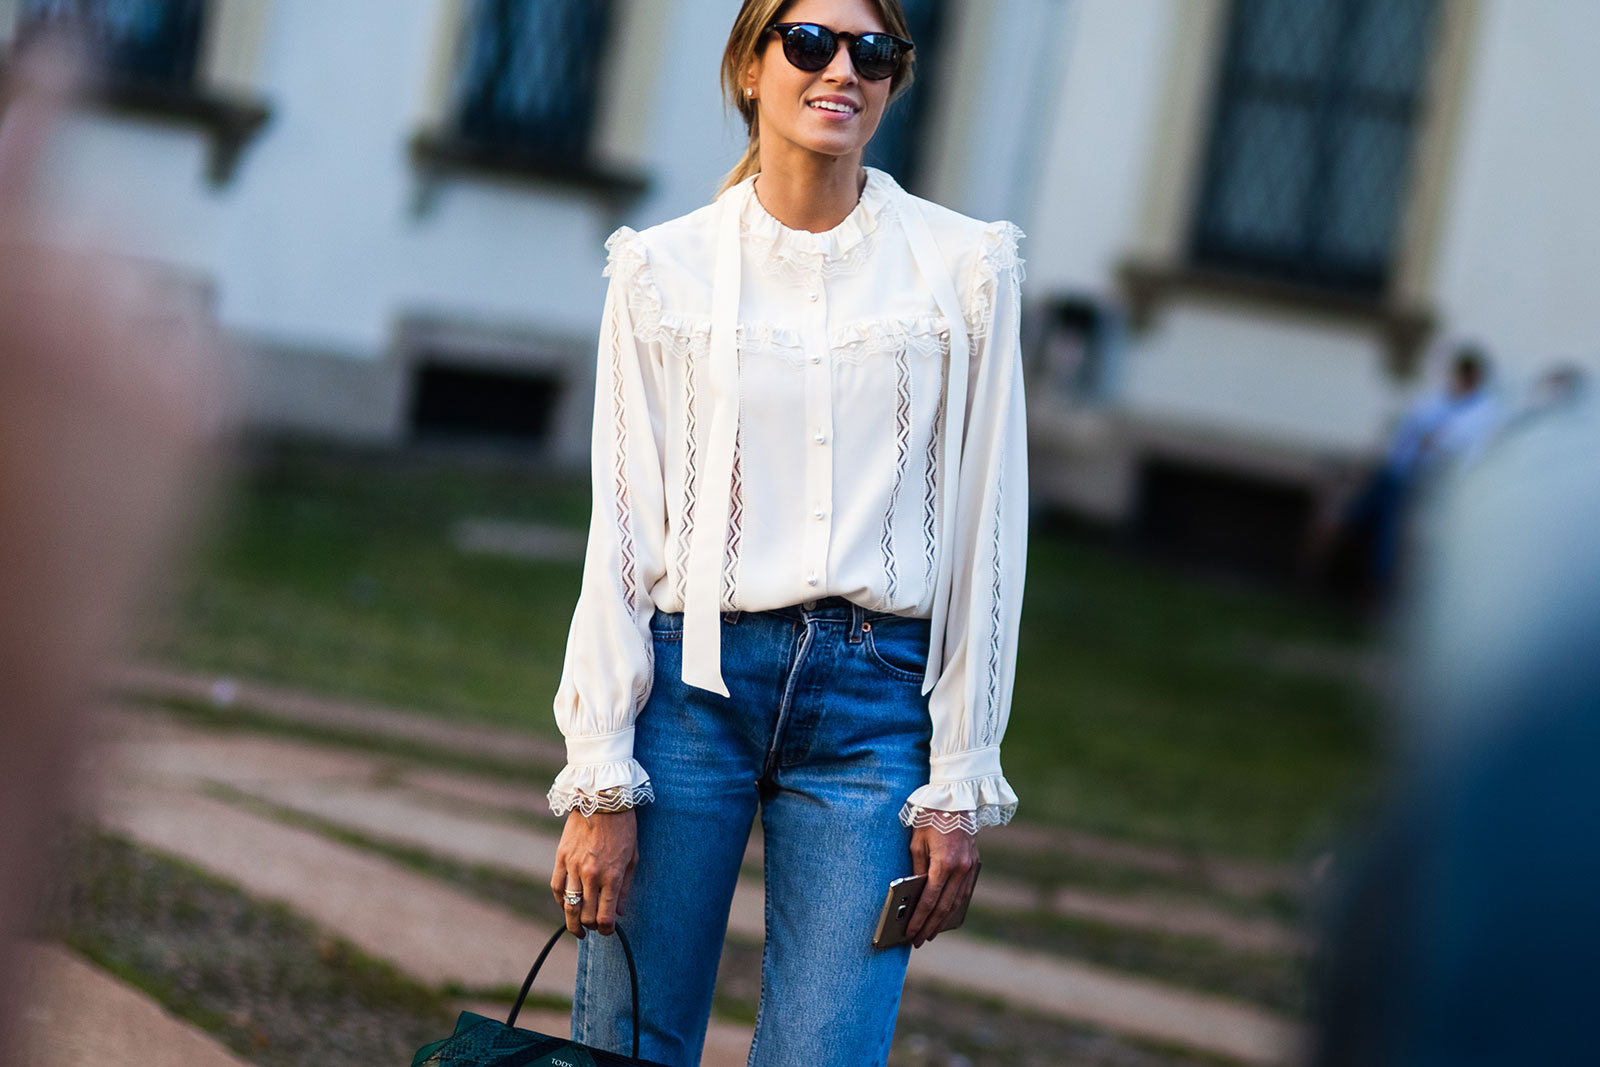 Woman wearing white blouse and Levis jeans at Milan Fashion Week